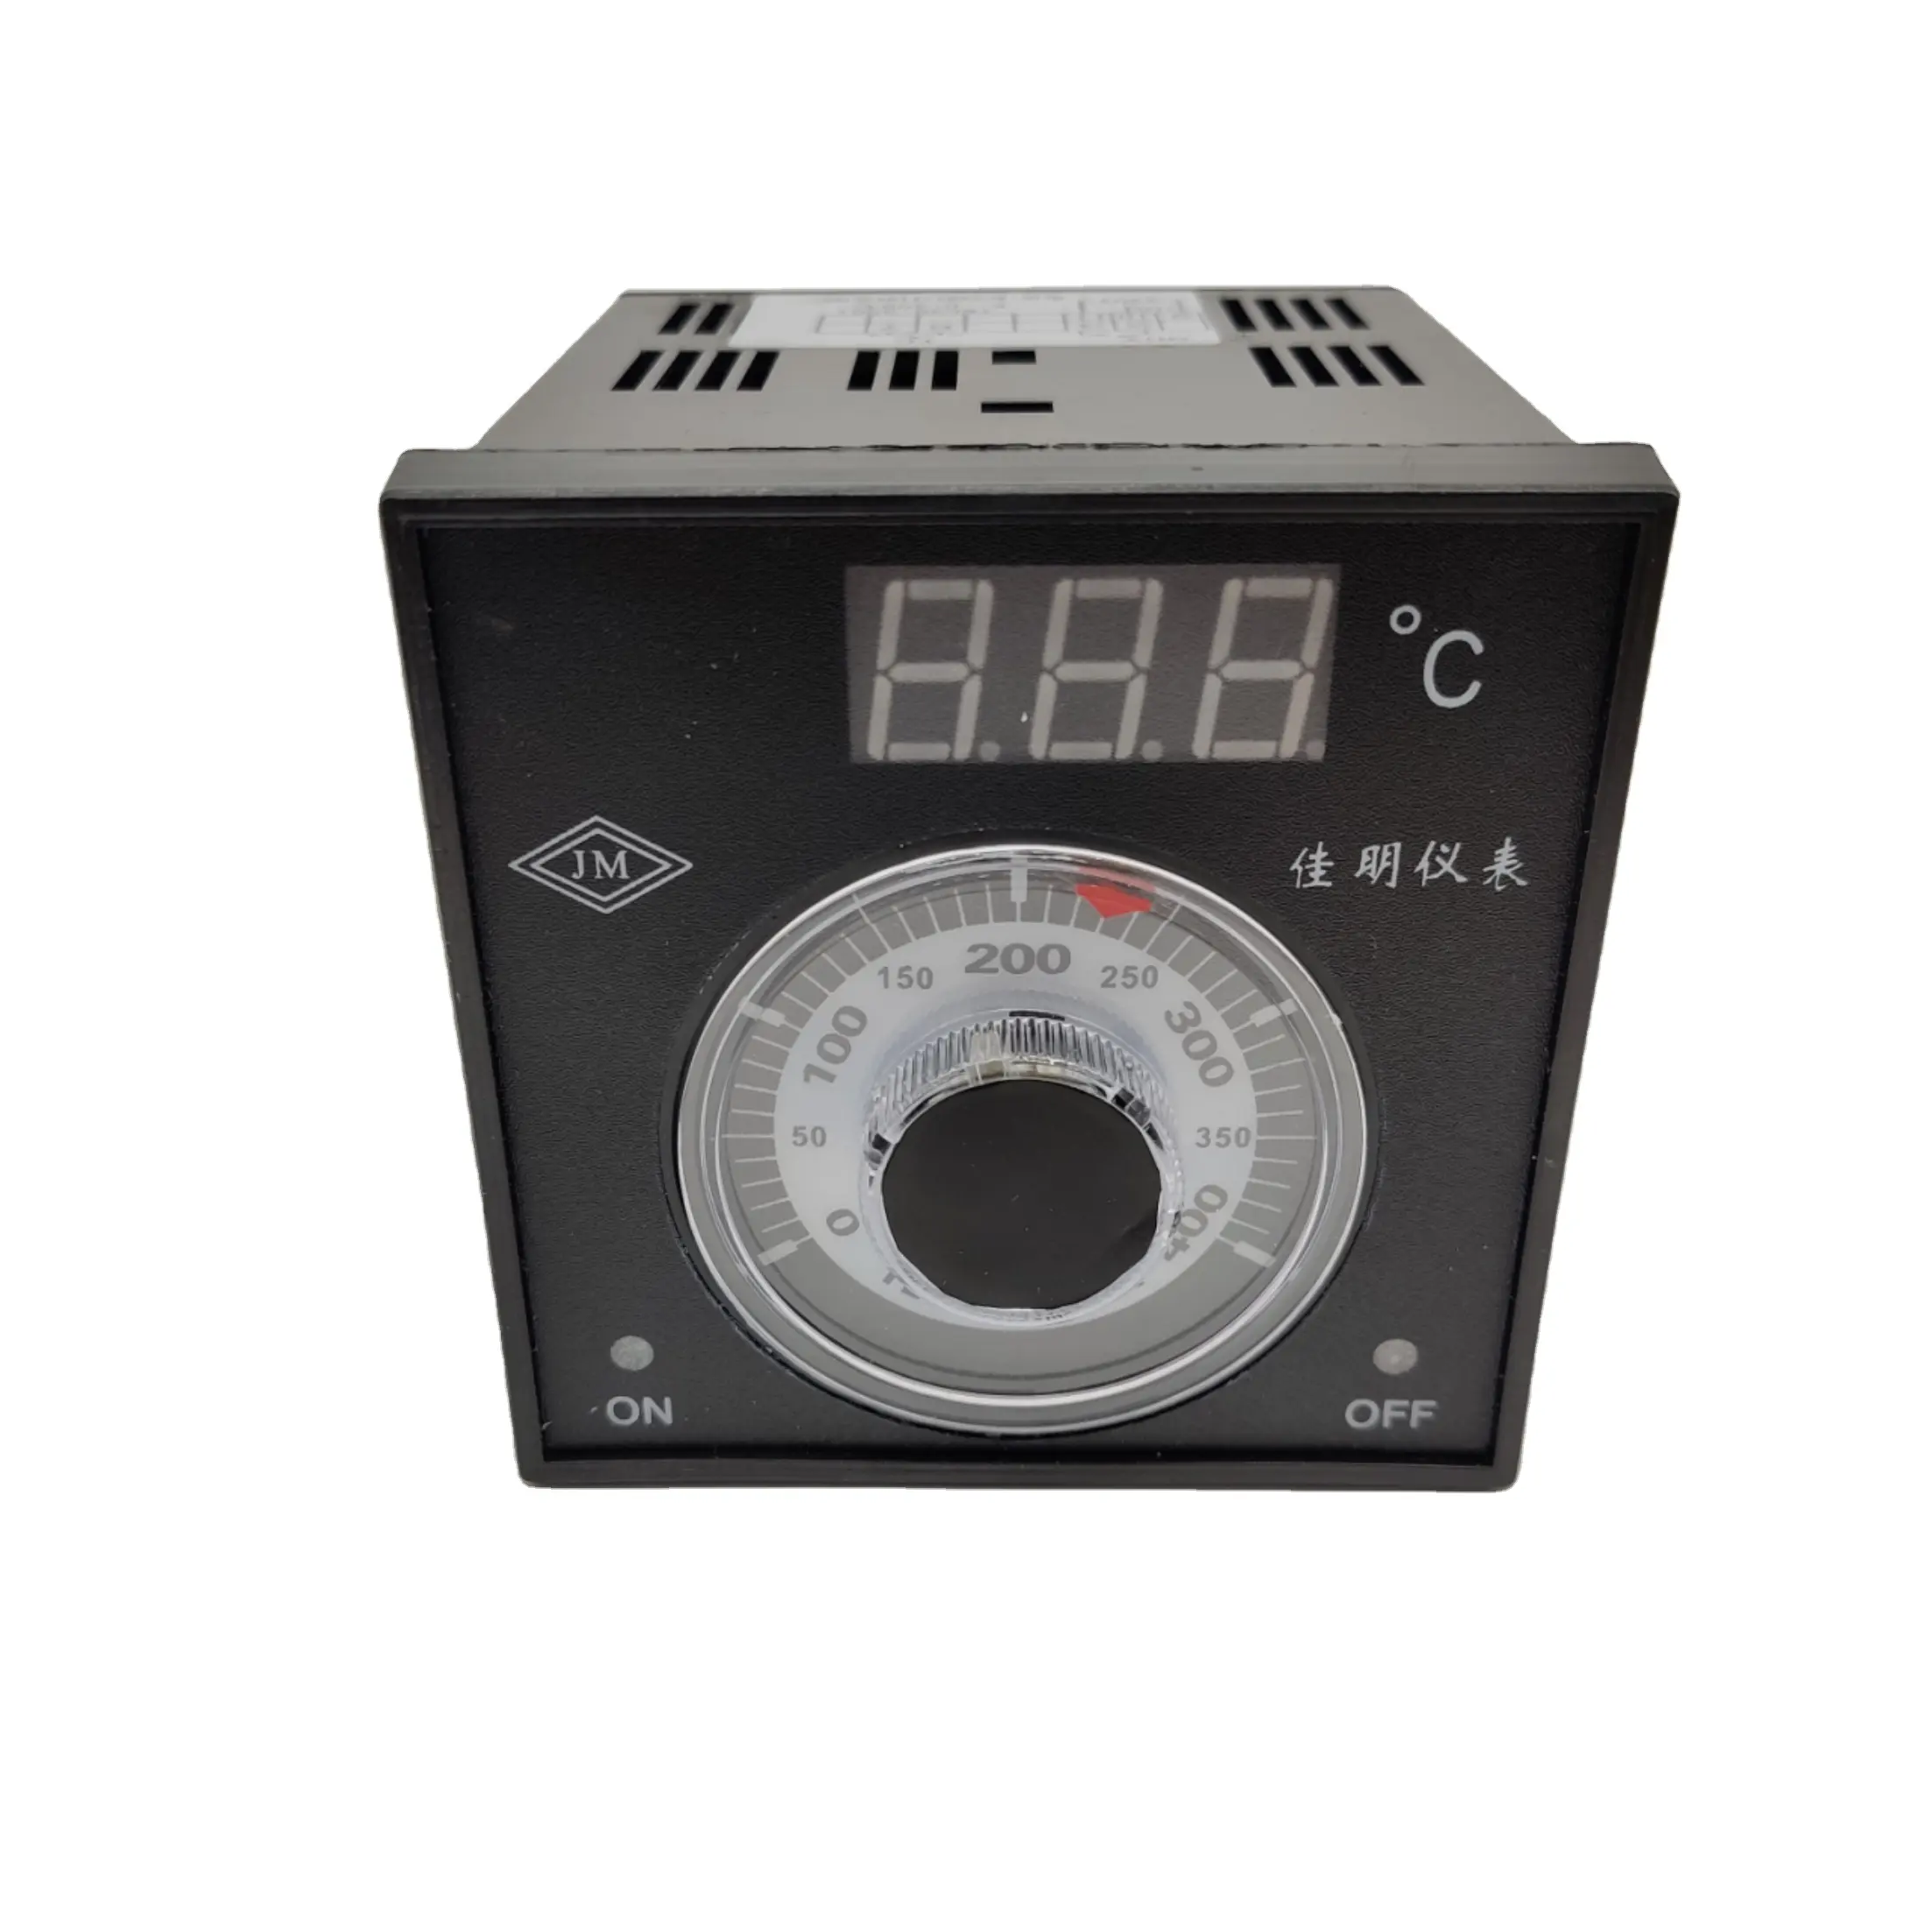 LED digital knob temperature controller Tel96-9001k